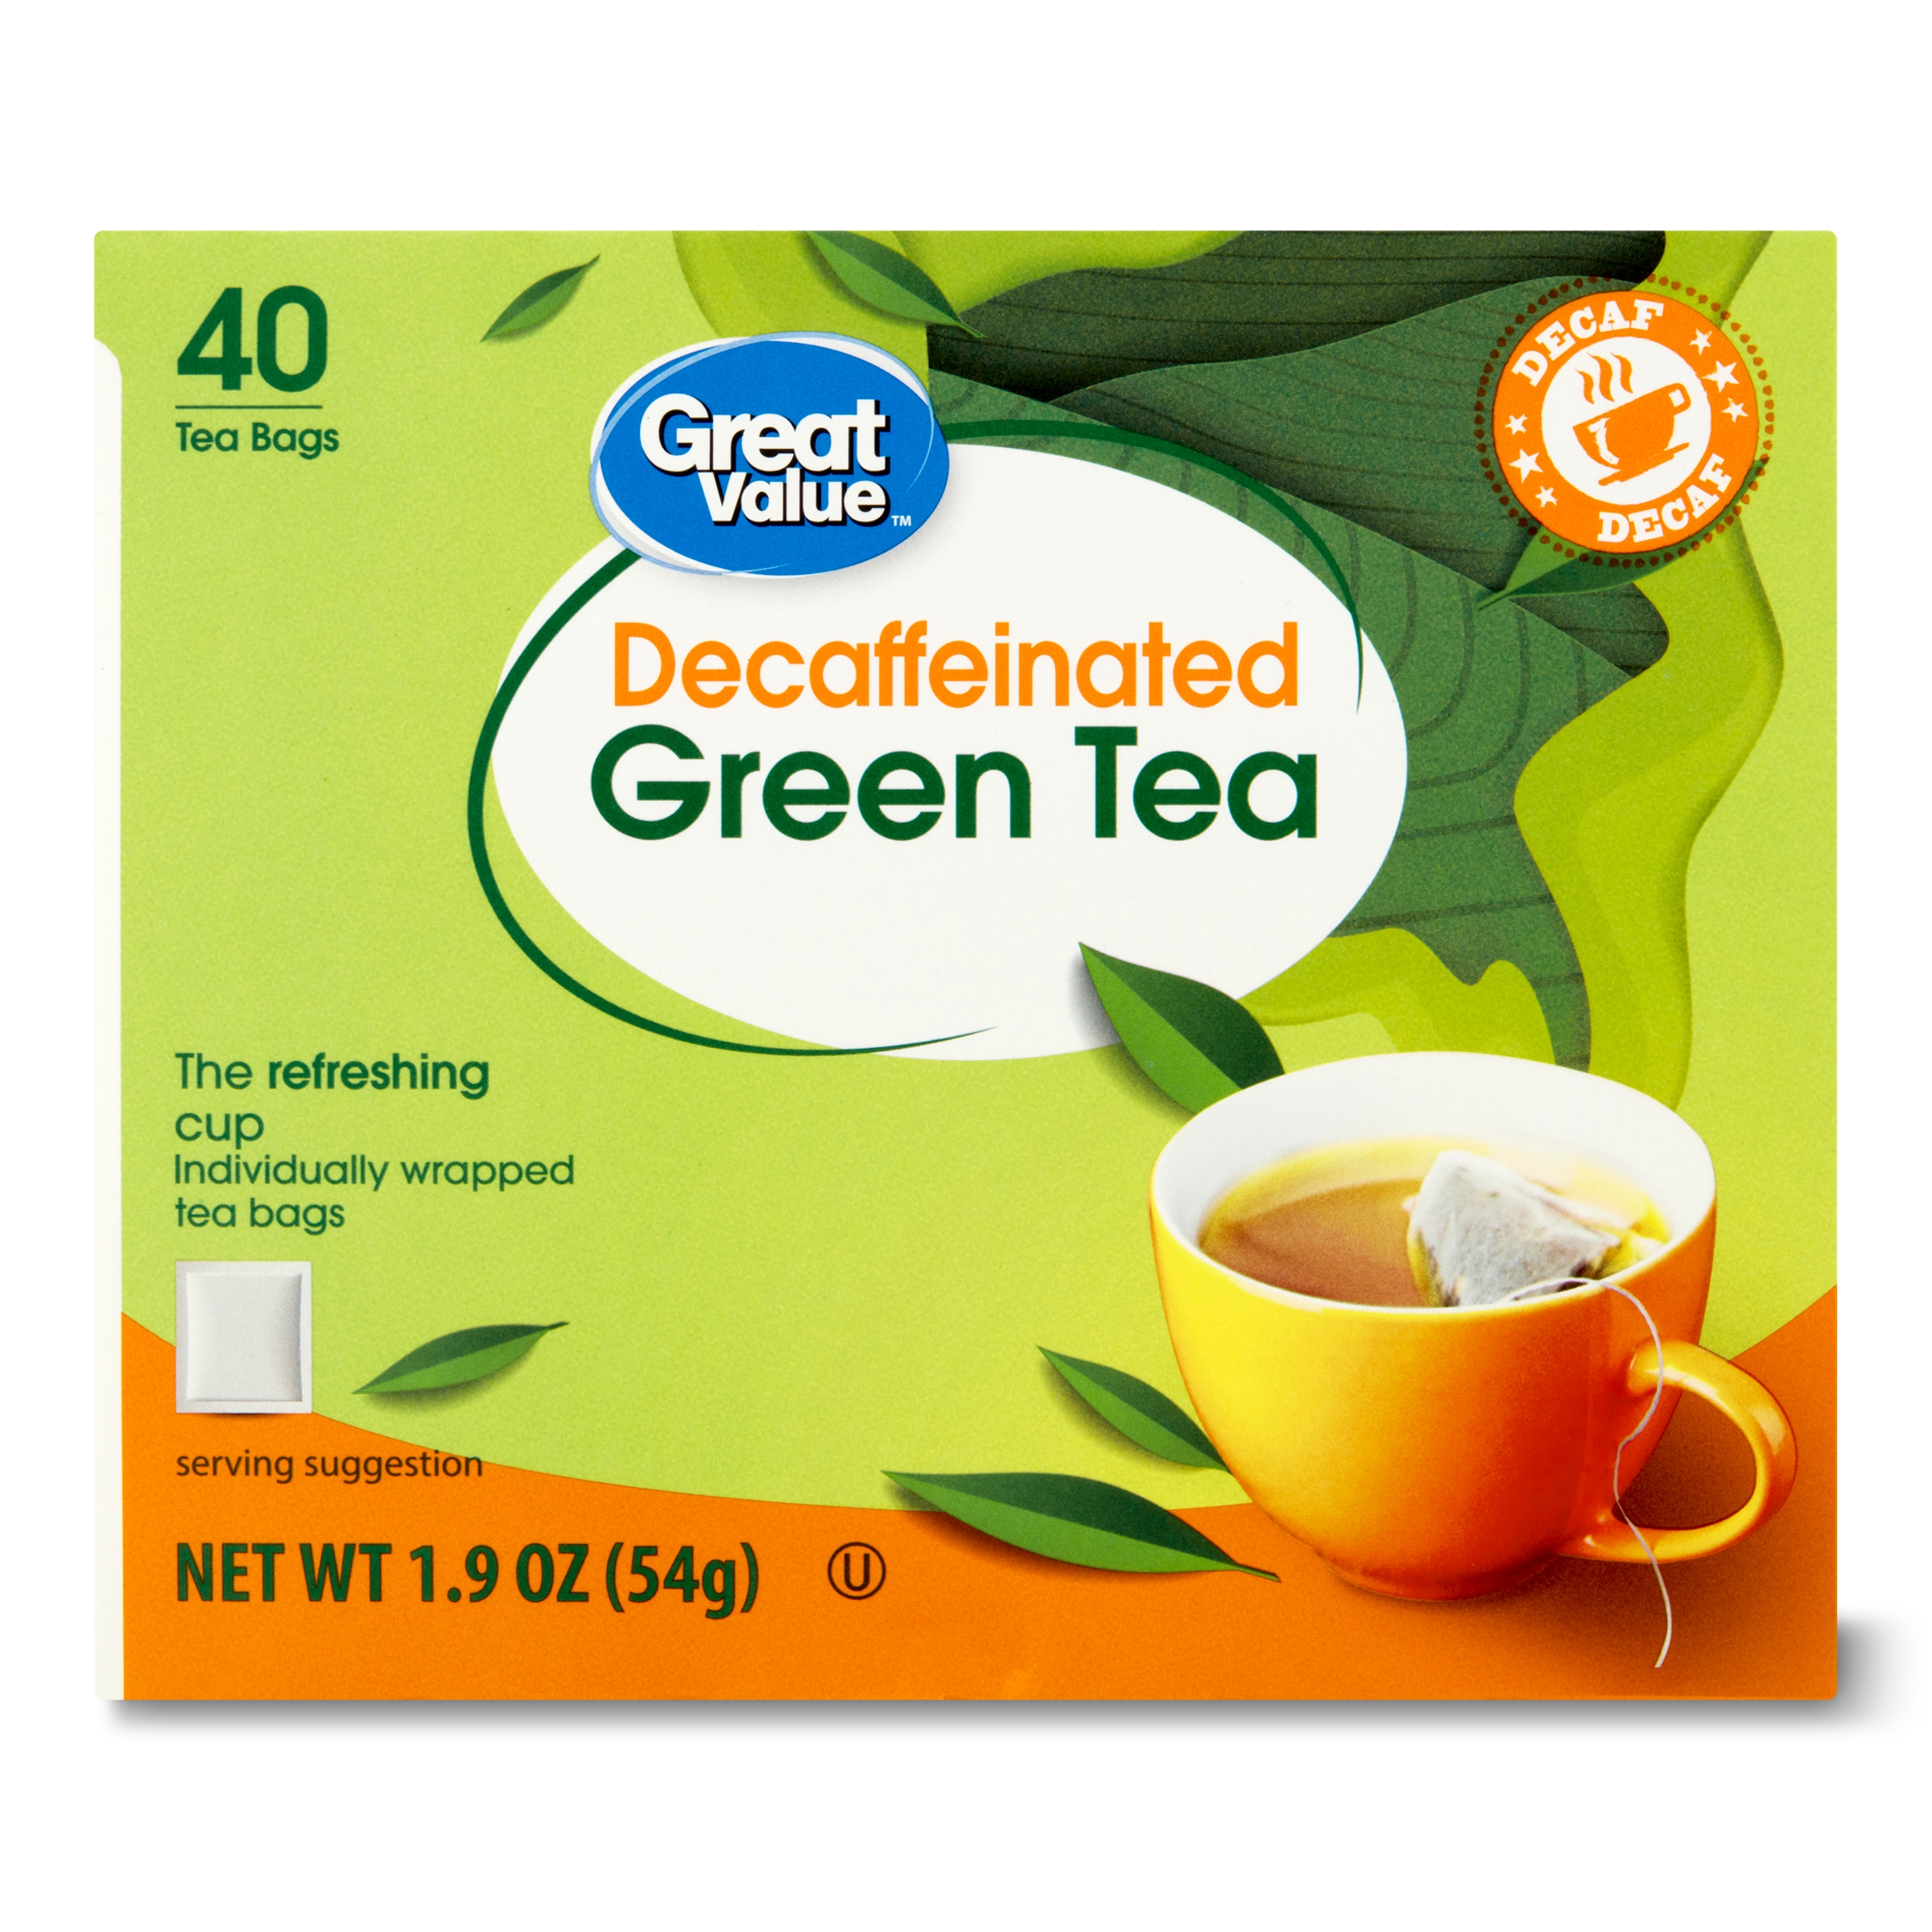 Great Value Decaffeinated Green Tea, Tea Bags, 1.9 oz, 40 Count - image 1 of 7